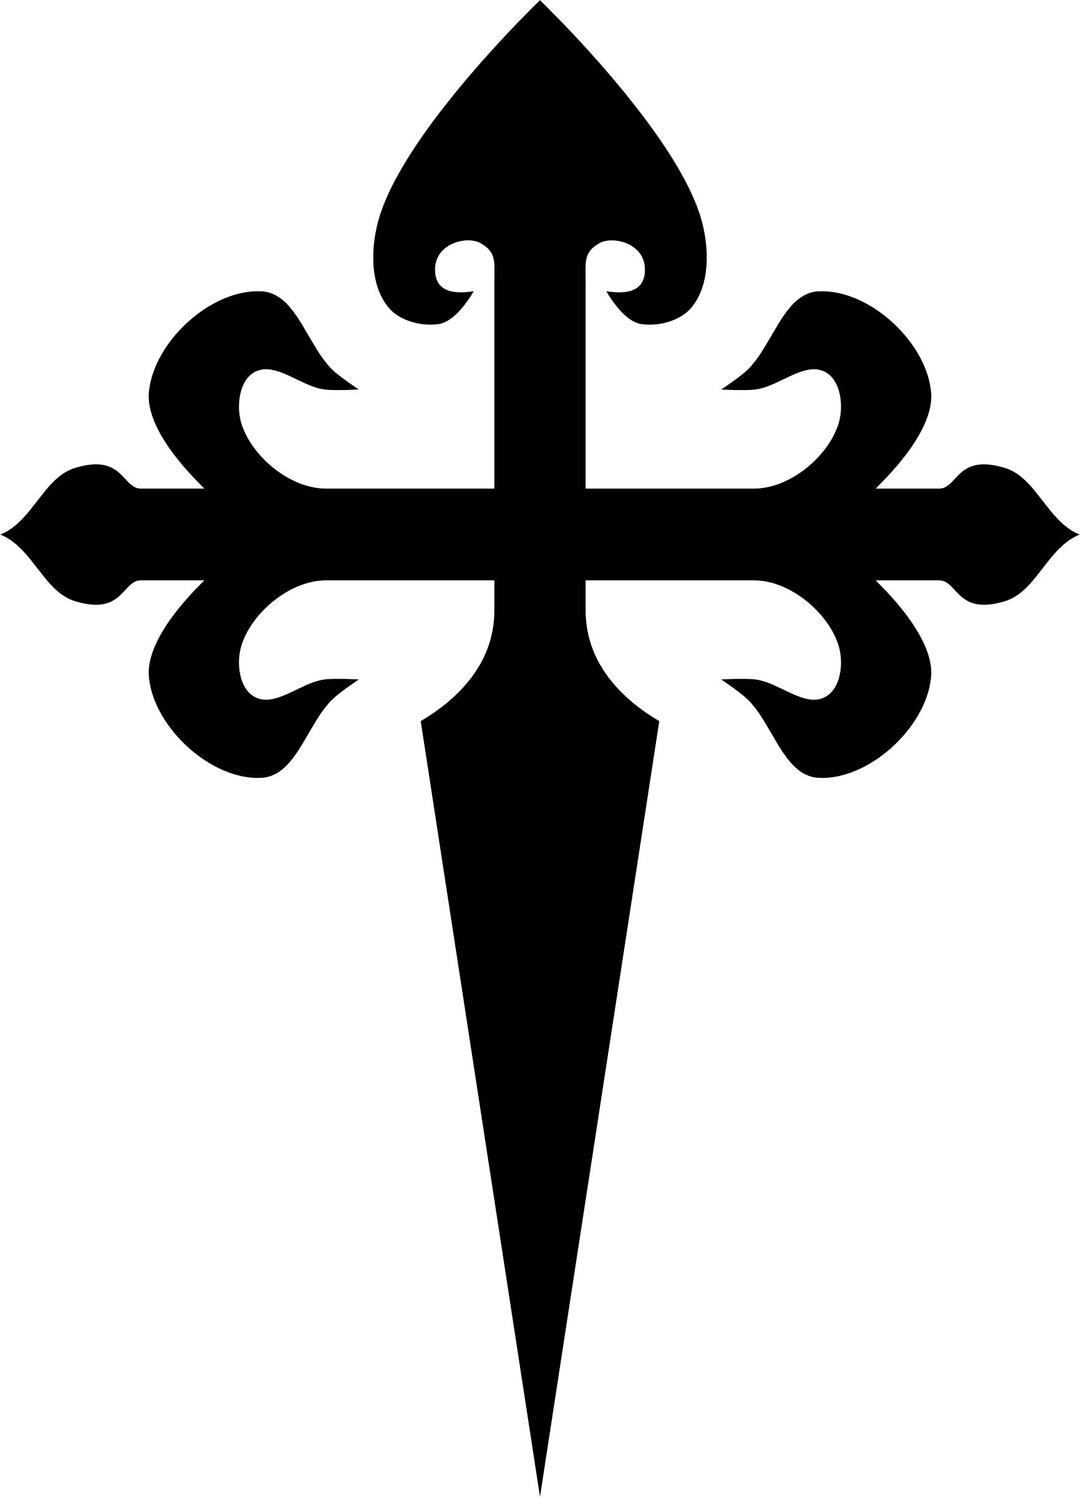 Cross of St James png transparent